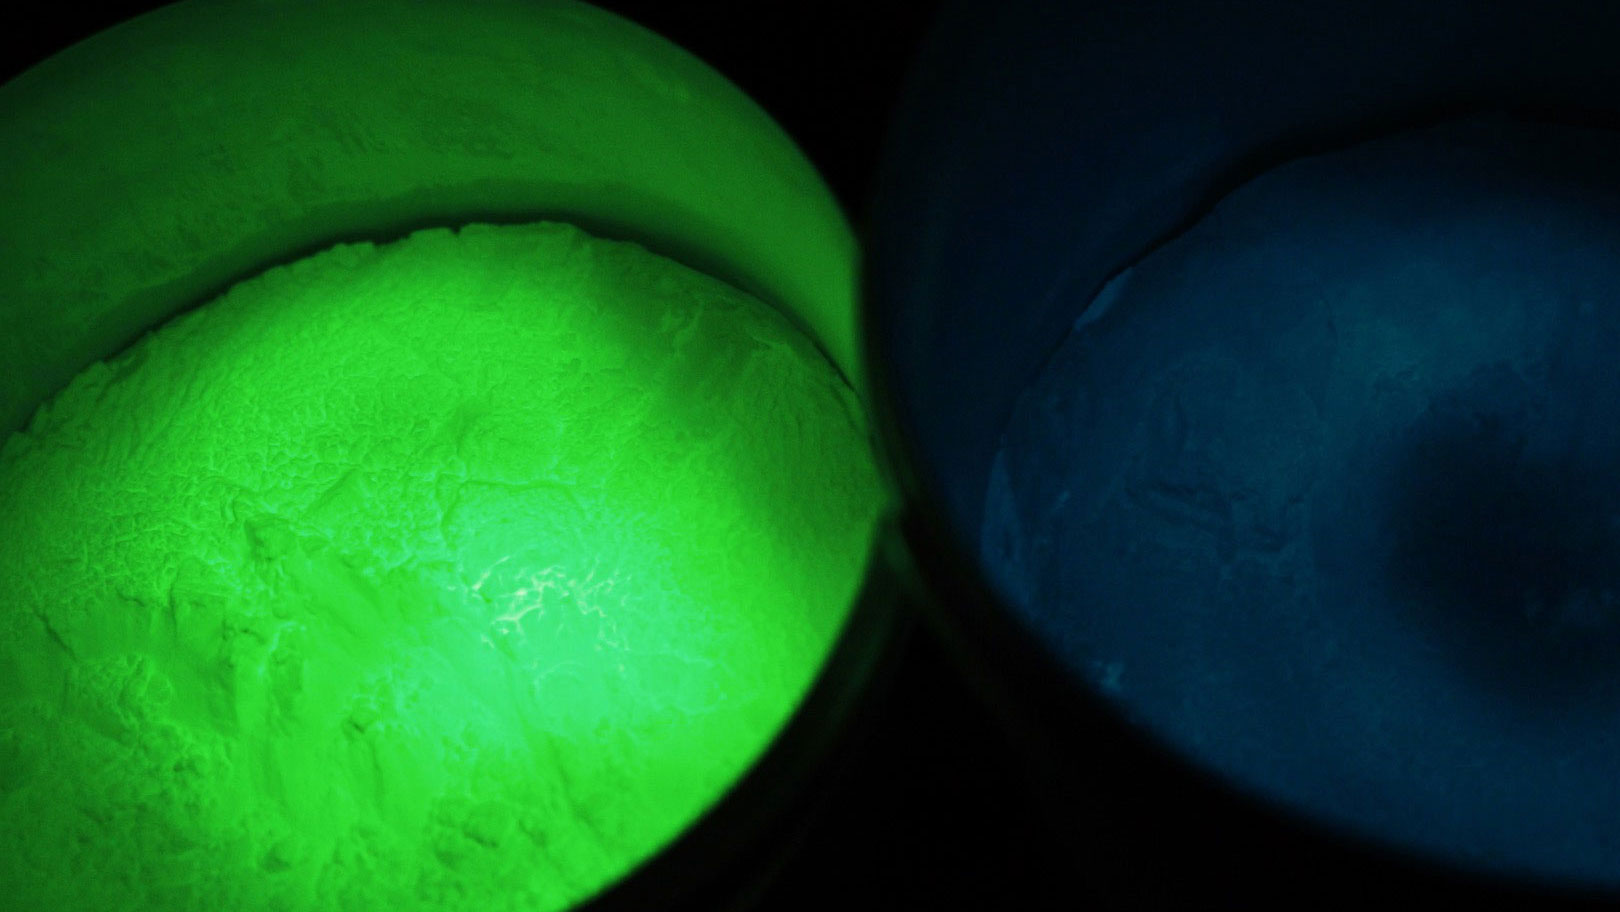 Phosphorescent & Fluorescent sur-mesure